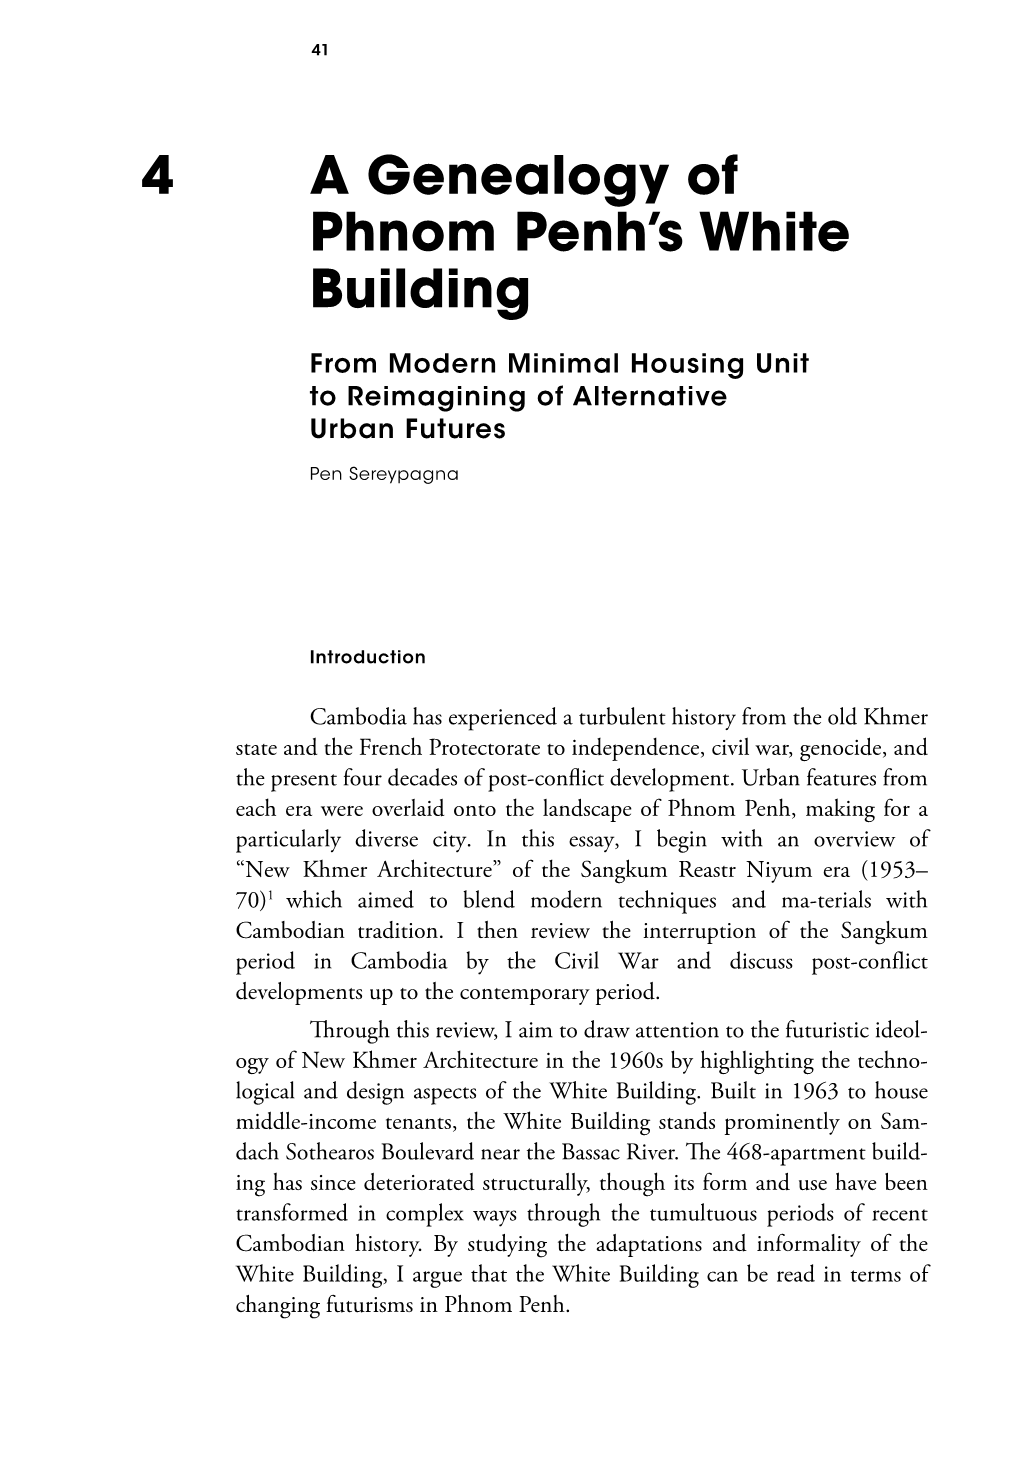 A Genealogy of Phnom Penh's White Building 4